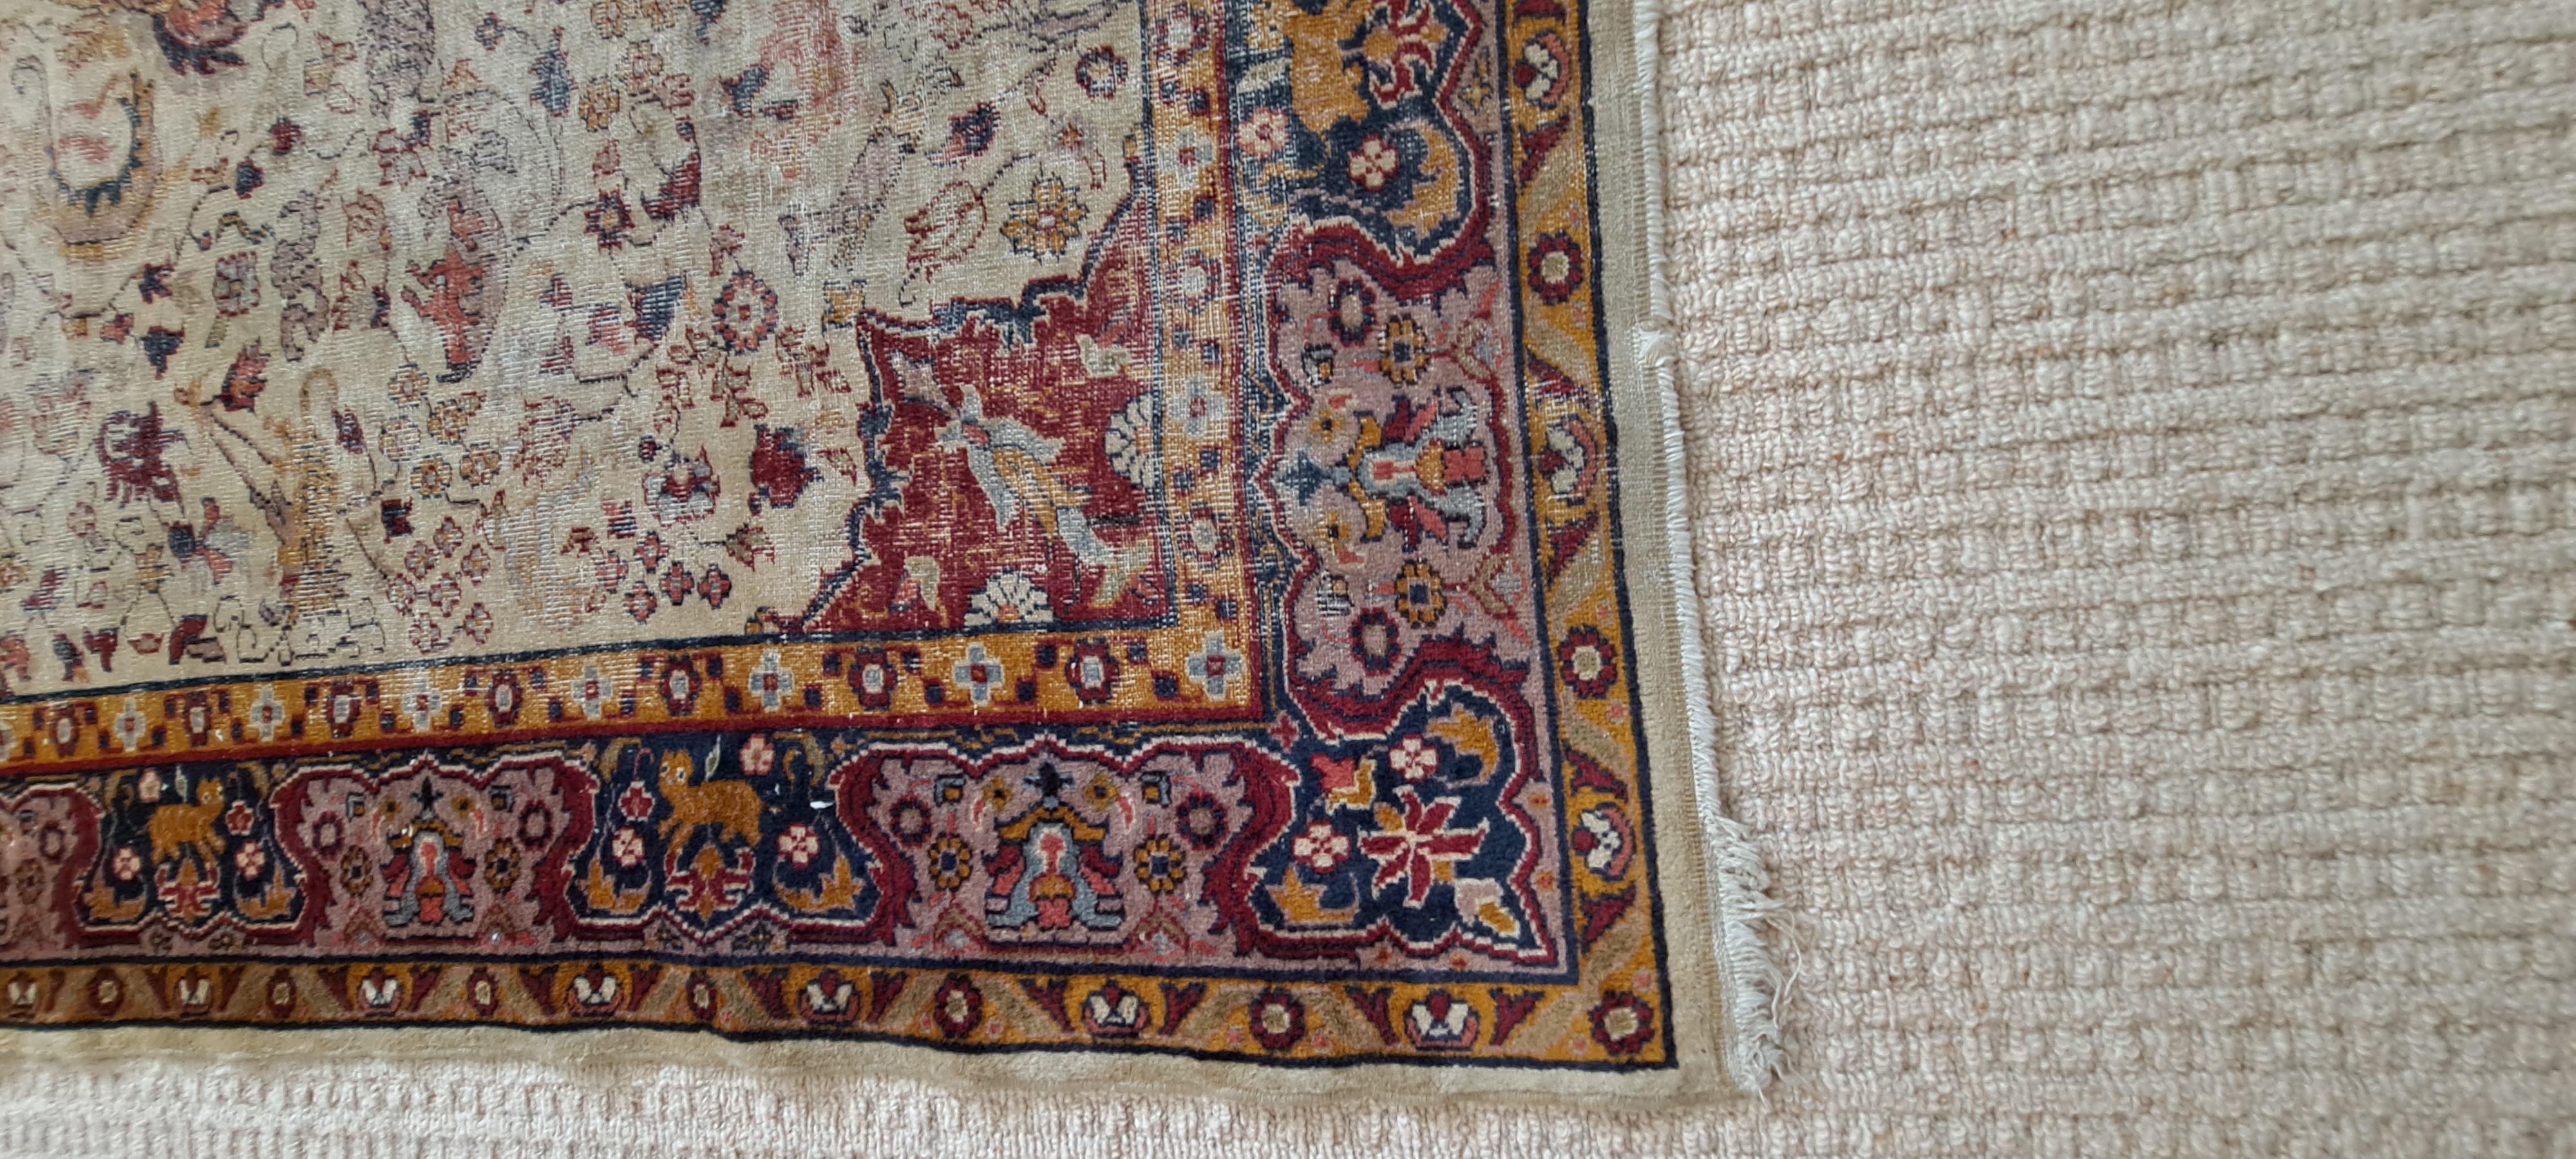 Antique Kashan Handwoven Silk Rug

50